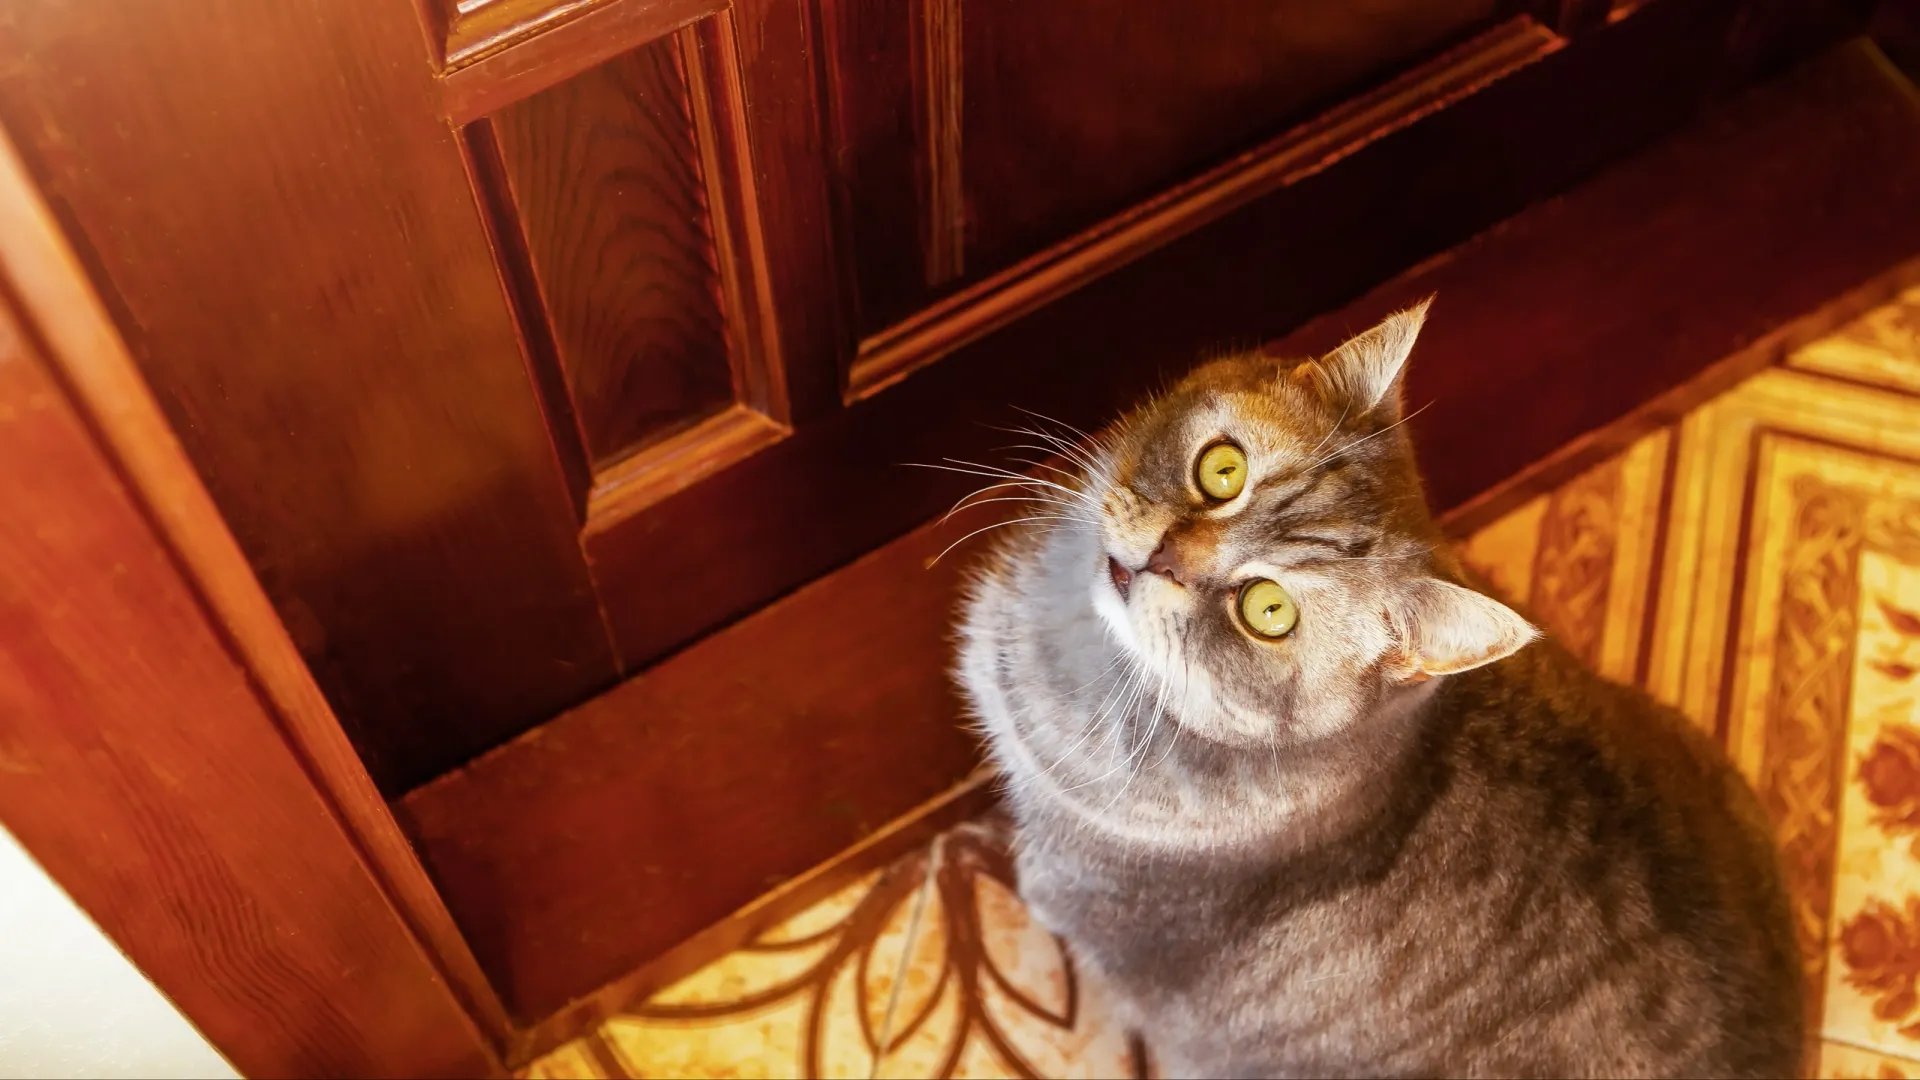 Кошка мяукает для «проверки связи». Фото: Natalliaskn / Shutterstock / Fotodom